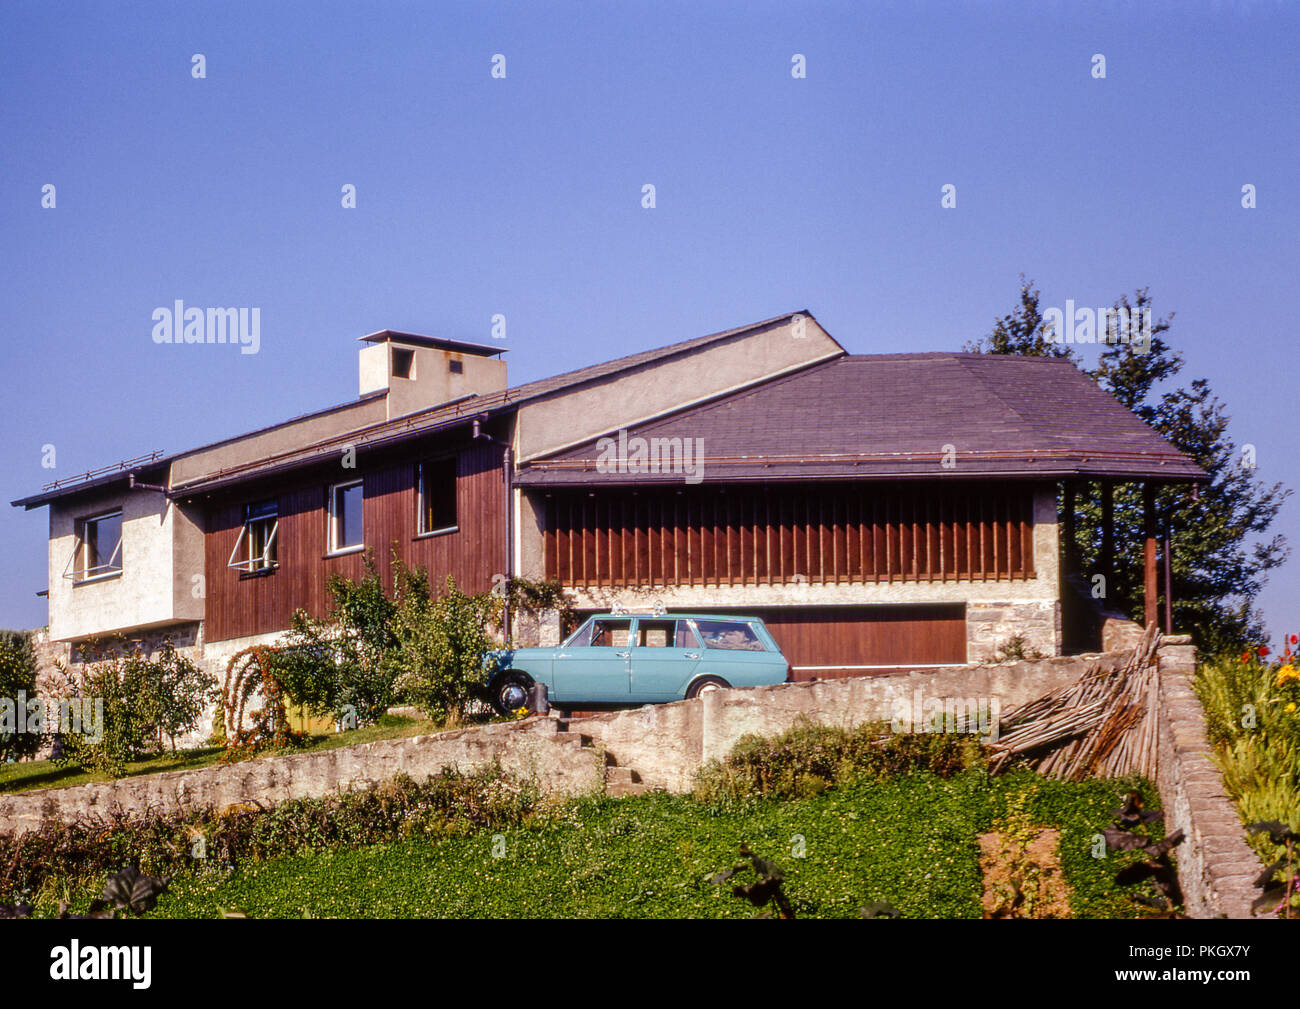 A house on the hillside in La Tour De Peilz, Vevey, Switzerland with a Hillman Minx Estate car outside. Taken in September 1971. Stock Photo